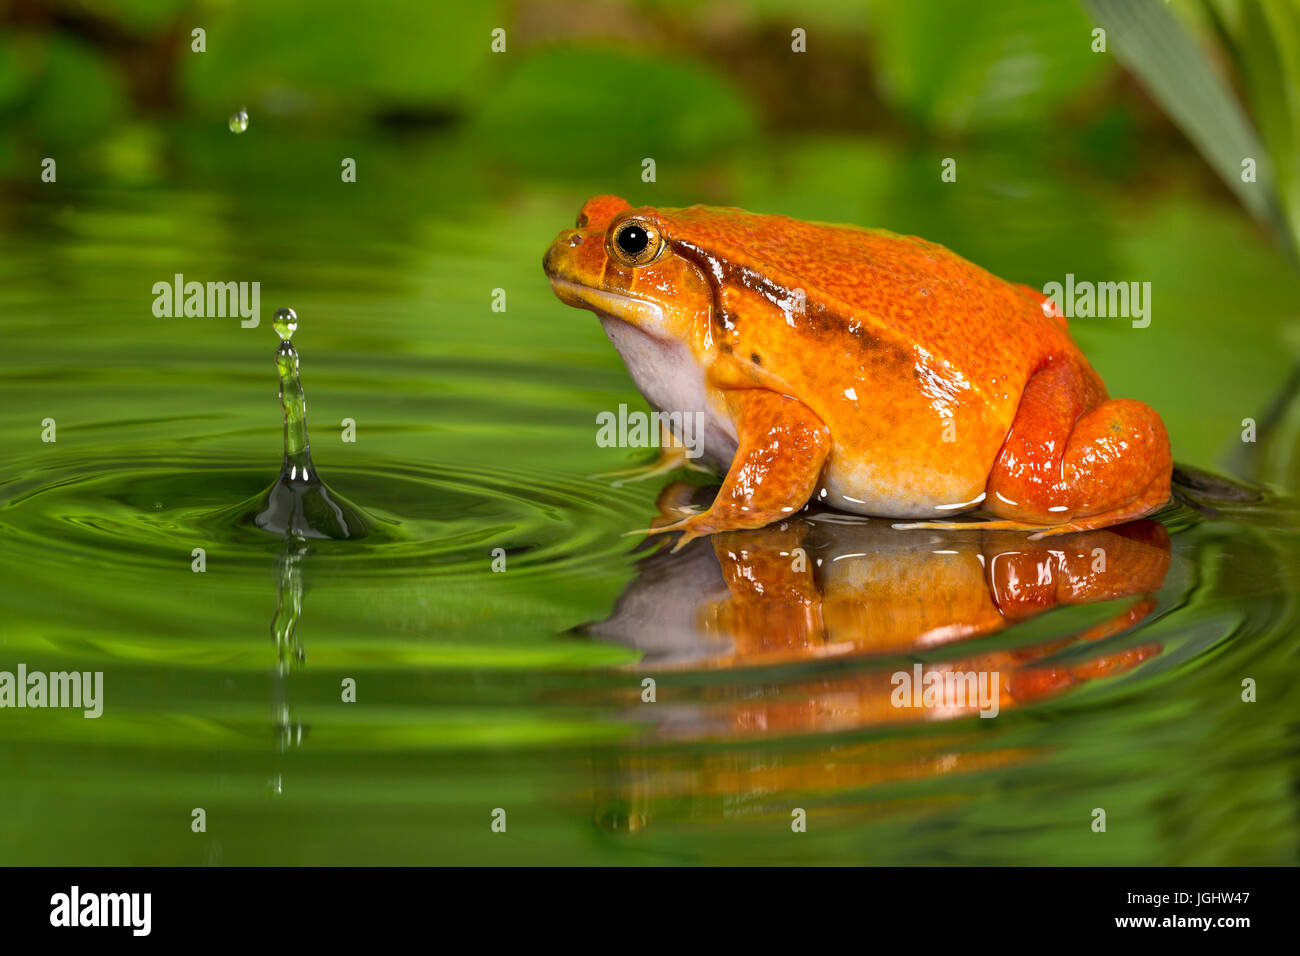 Tomate Frosch im Teich mit Reflektion Stockfotografie - Alamy